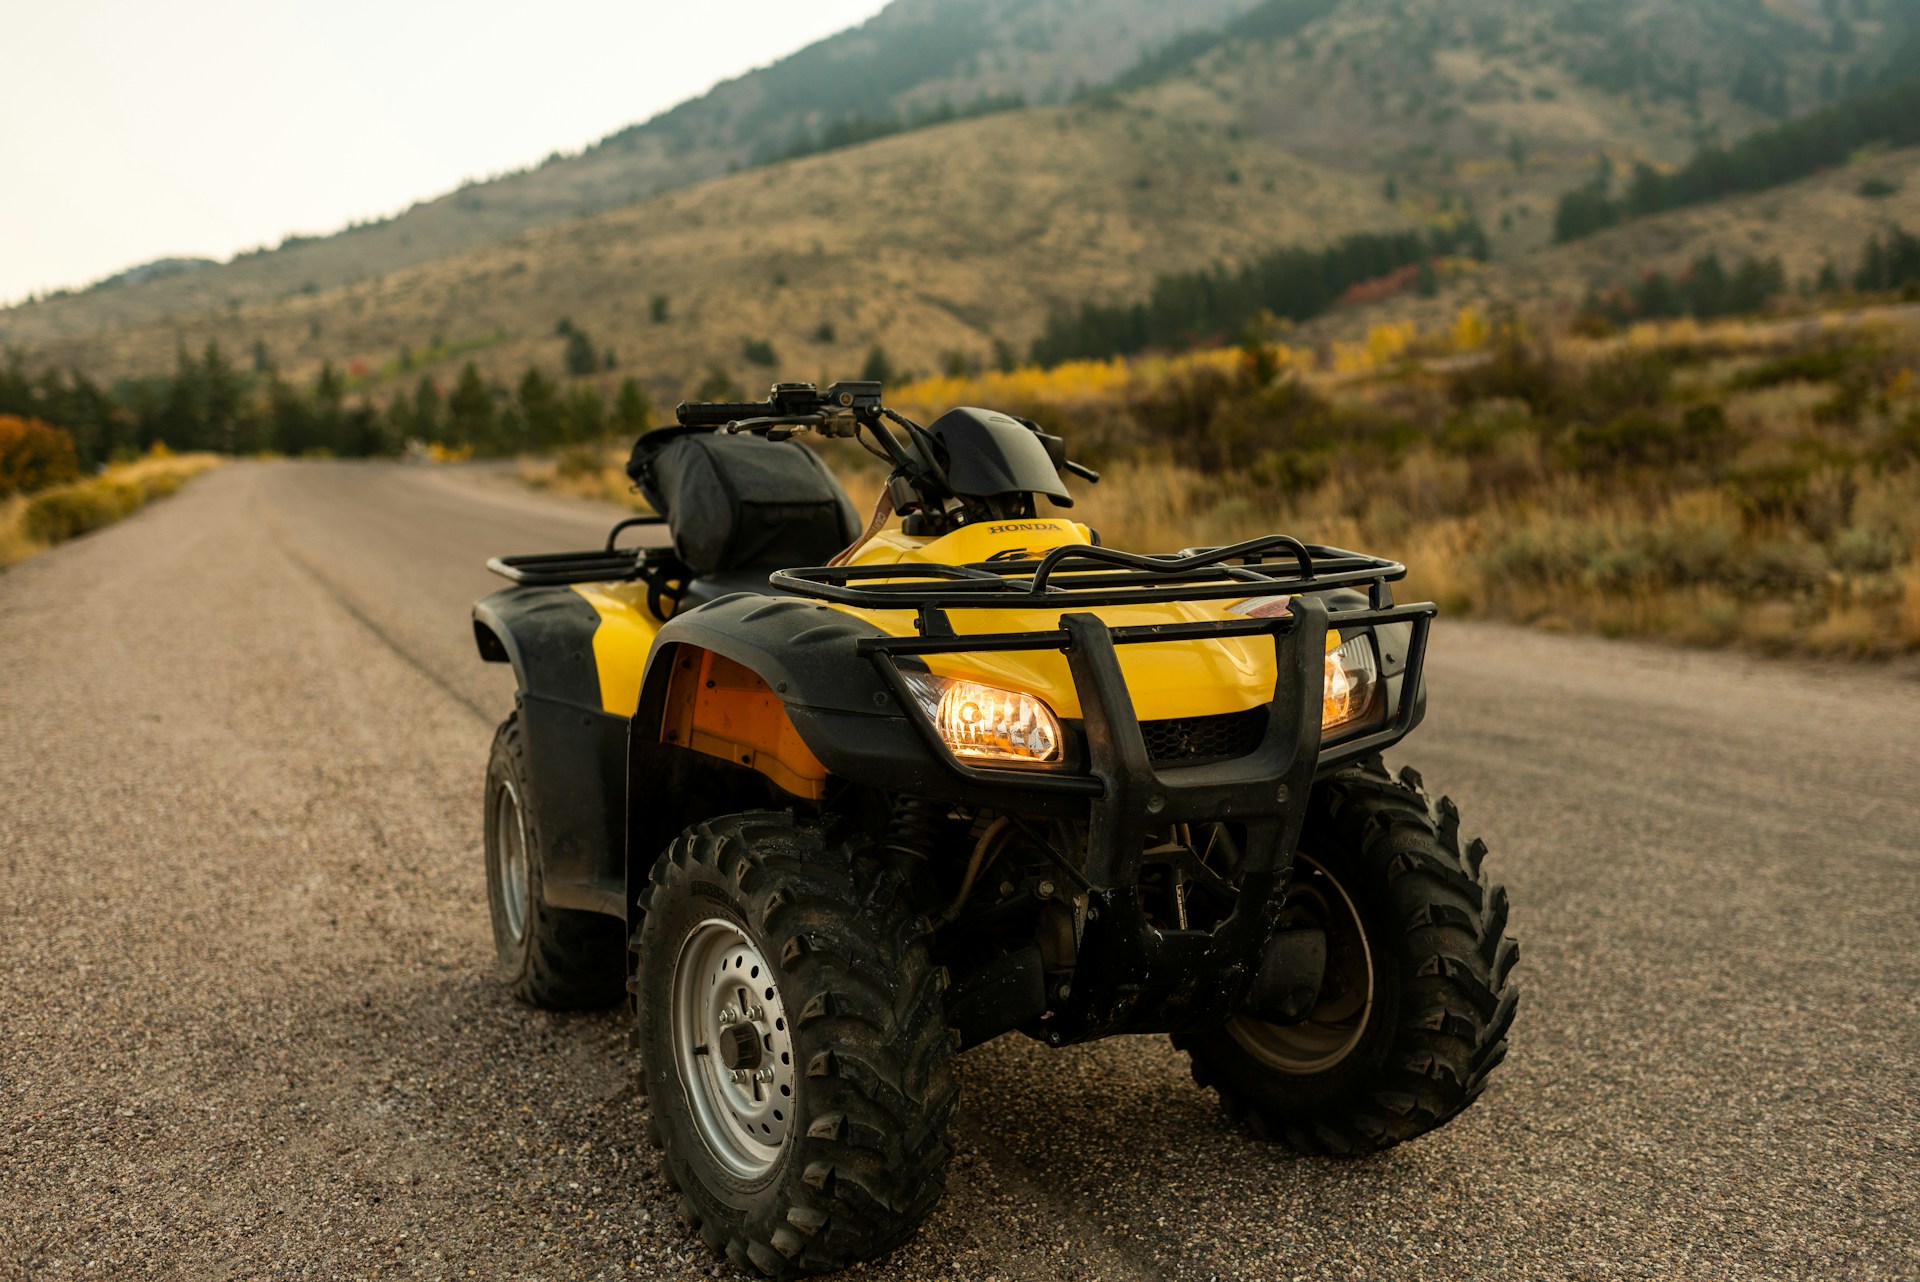 ATV with a GPS tracker